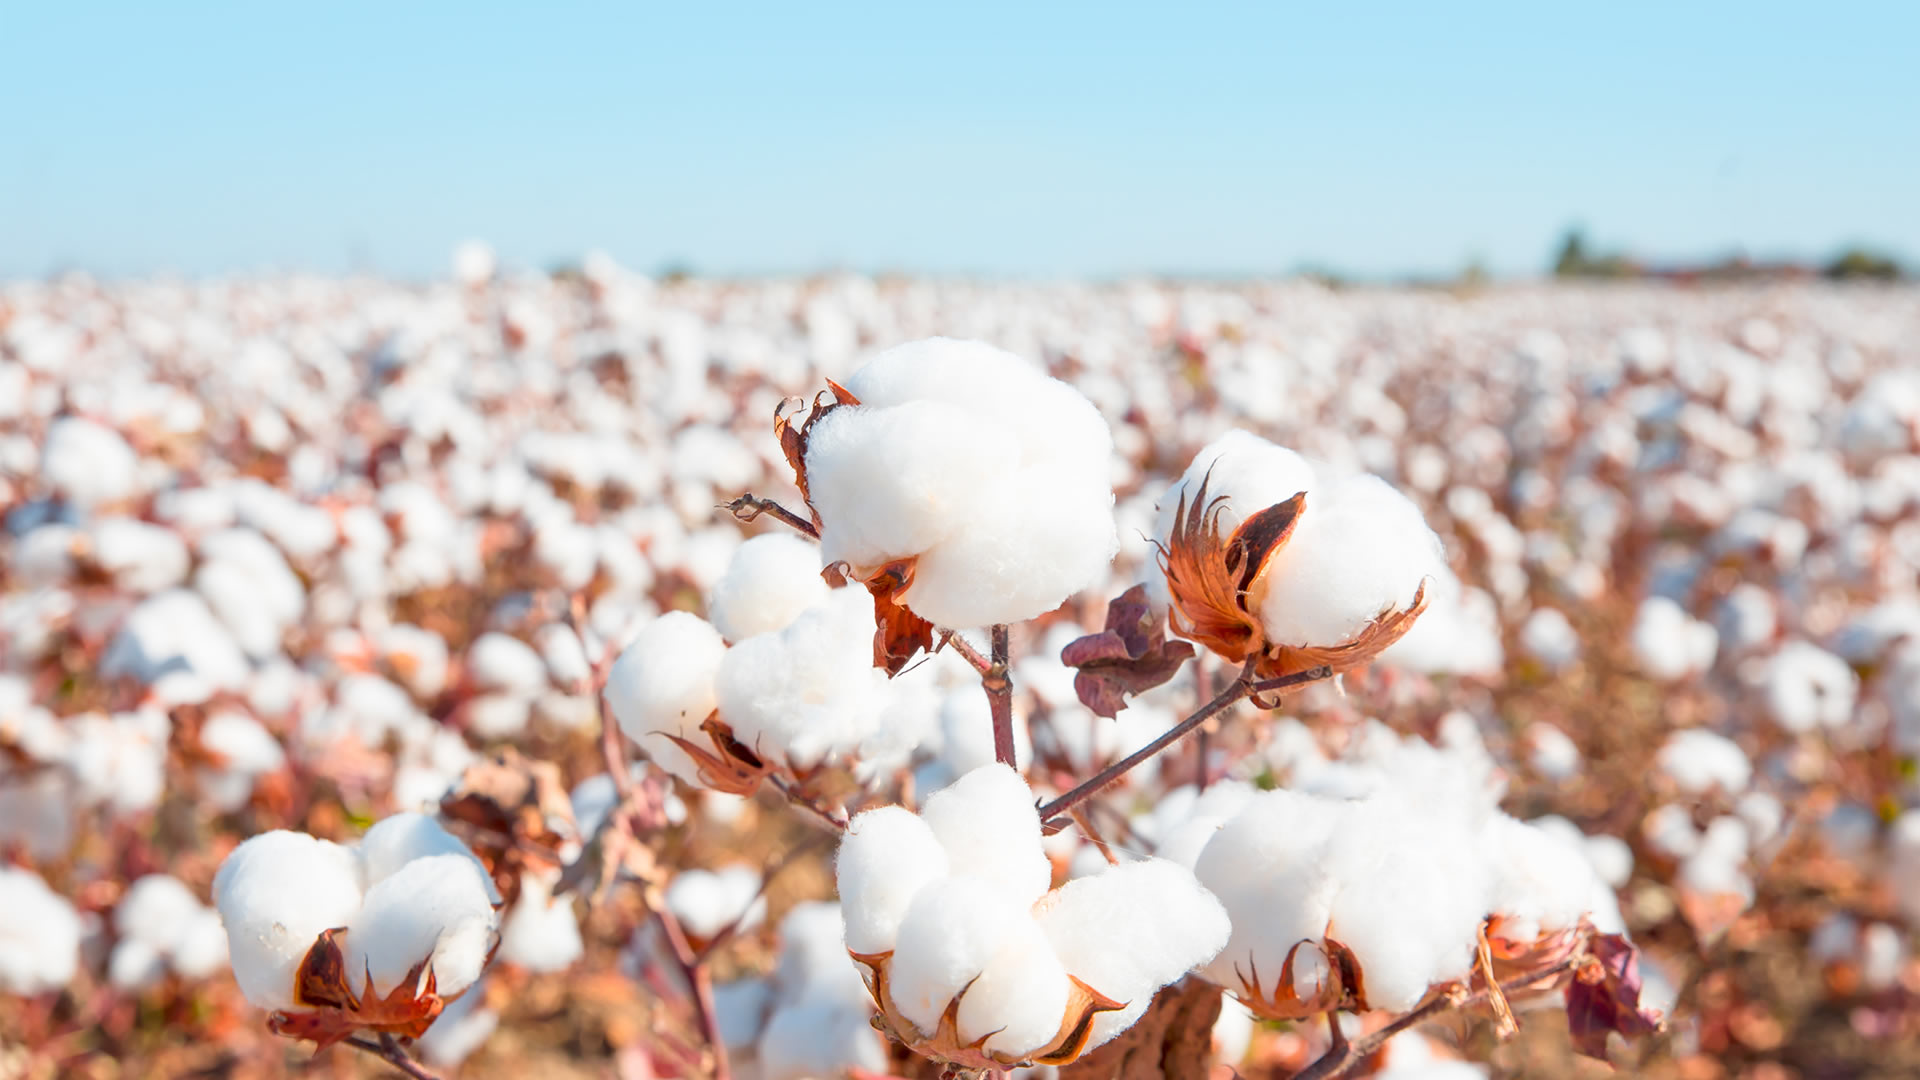 India needs to explore cotton reserves stockpiling